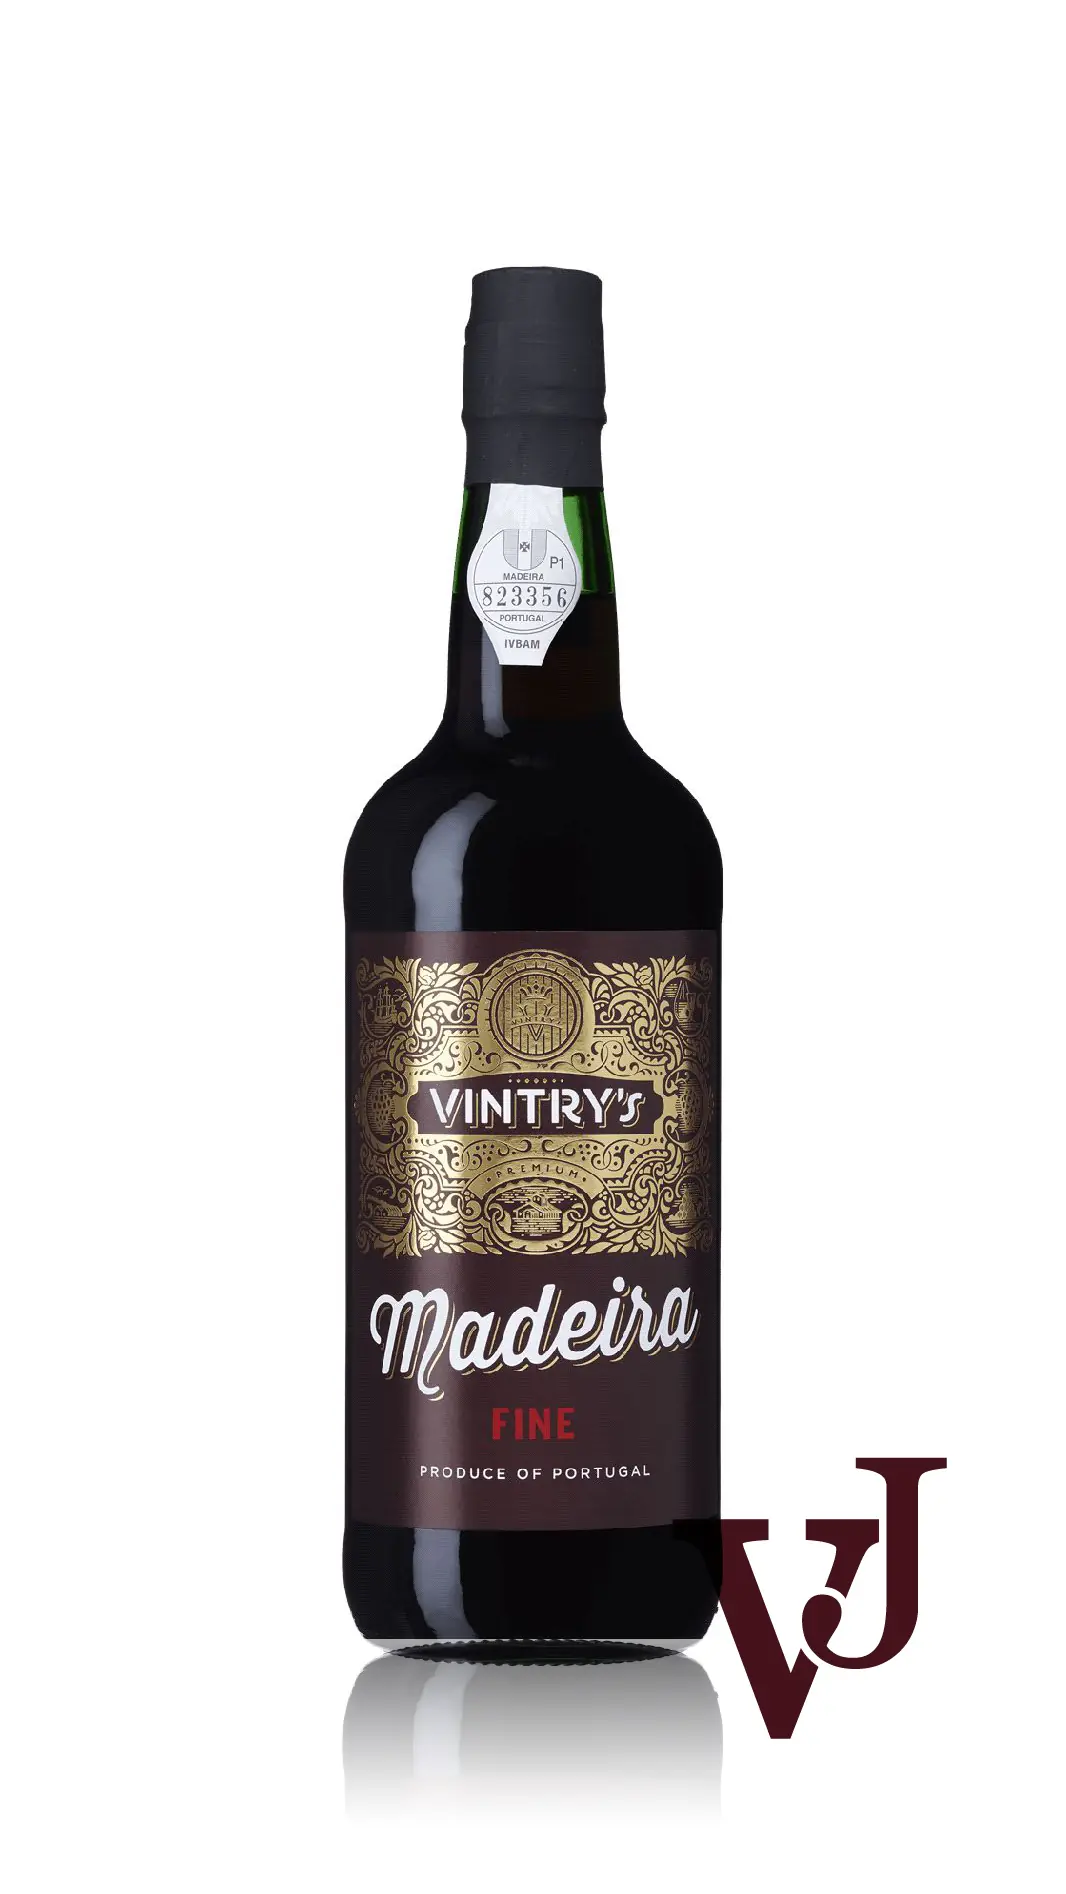 Övrigt vin - Vintry's Madeira Fine artikel nummer 788201 från producenten H M Borges - Vinjournalen.se